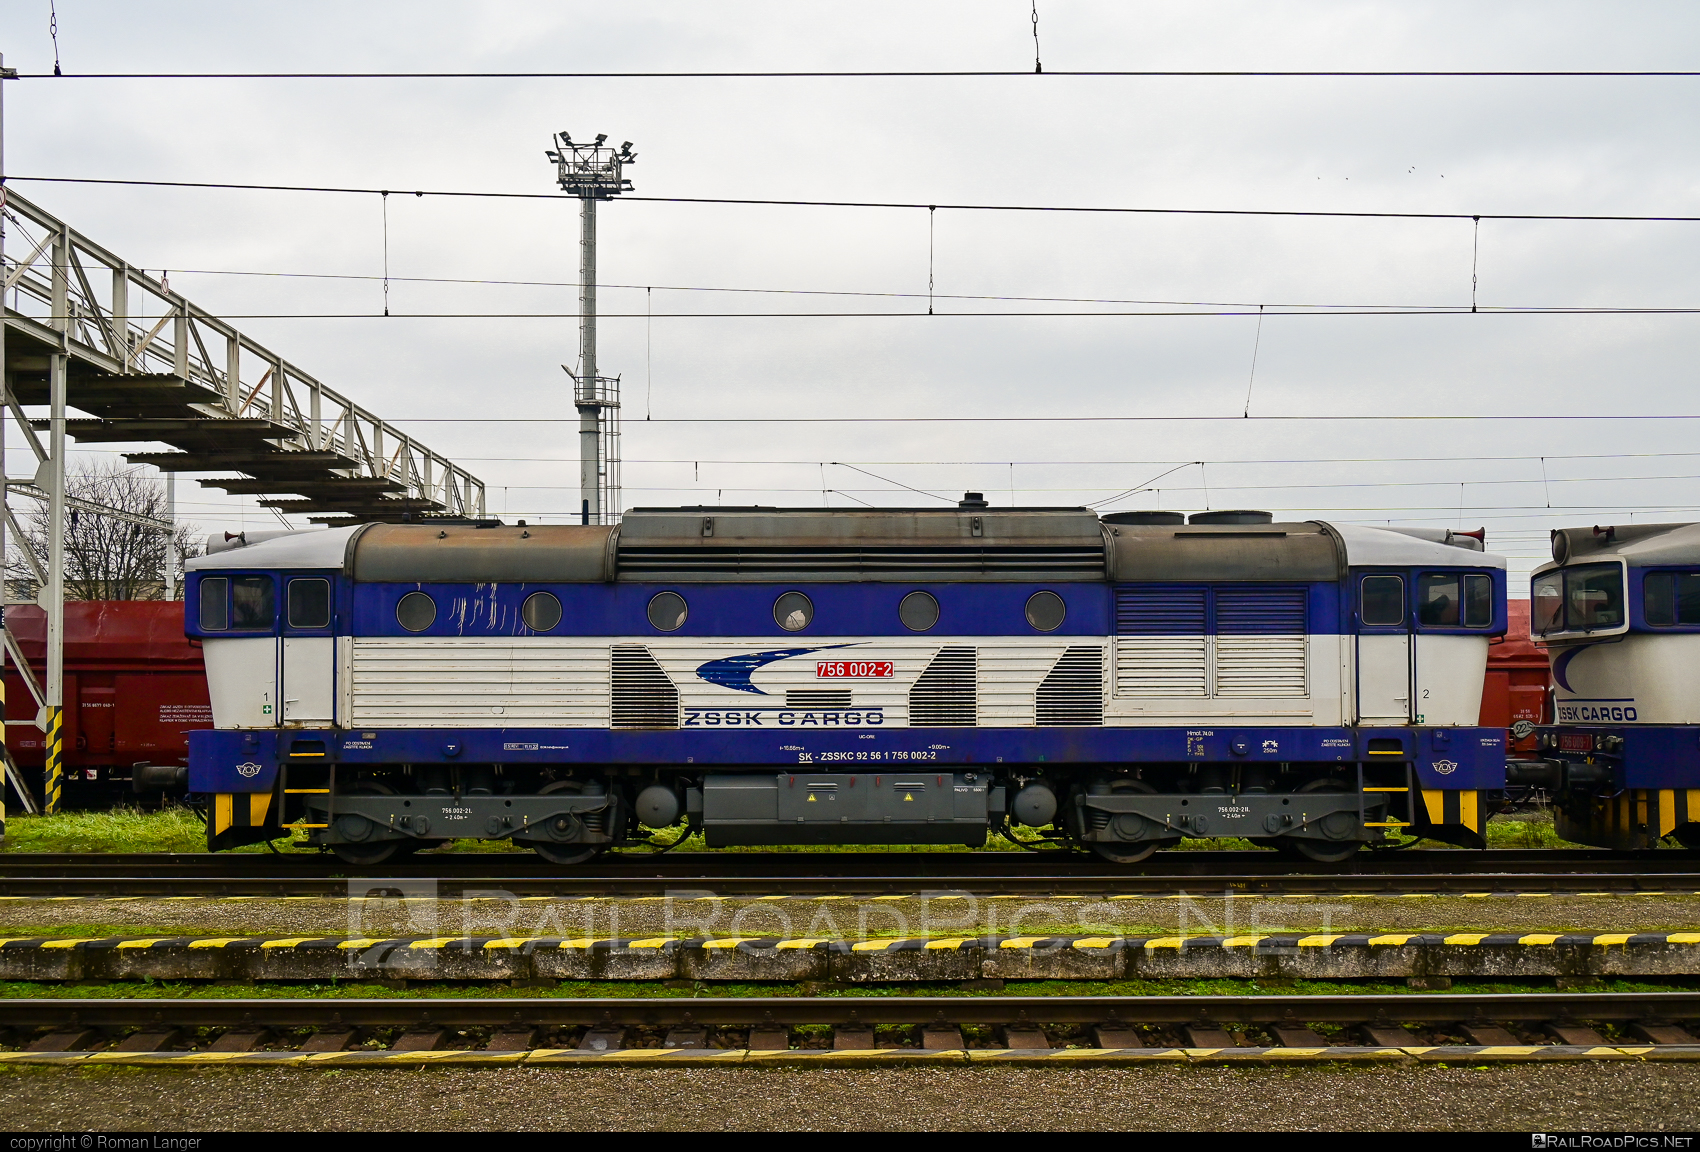 ŽOS Zvolen Class 756 - 756 002-2 operated by Železničná Spoločnost' Cargo Slovakia a.s. #ZeleznicnaSpolocnostCargoSlovakia #brejlovec #okuliarnik #zoszvolen #zoszvolen756 #zsskc756 #zsskcargo #zsskcclass756